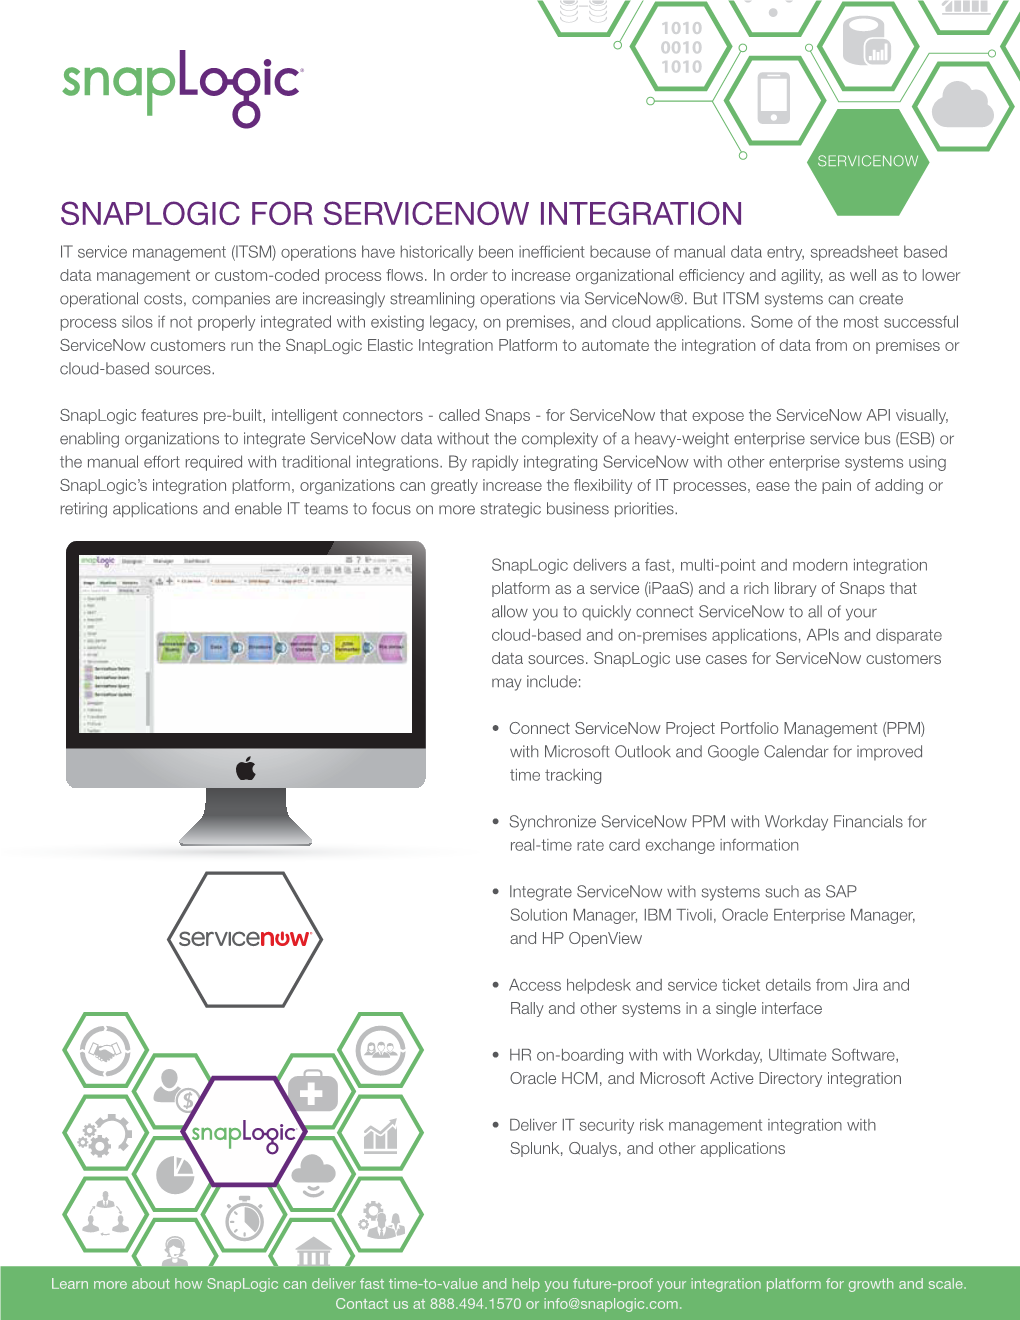 Snaplogic for Servicenow Integration